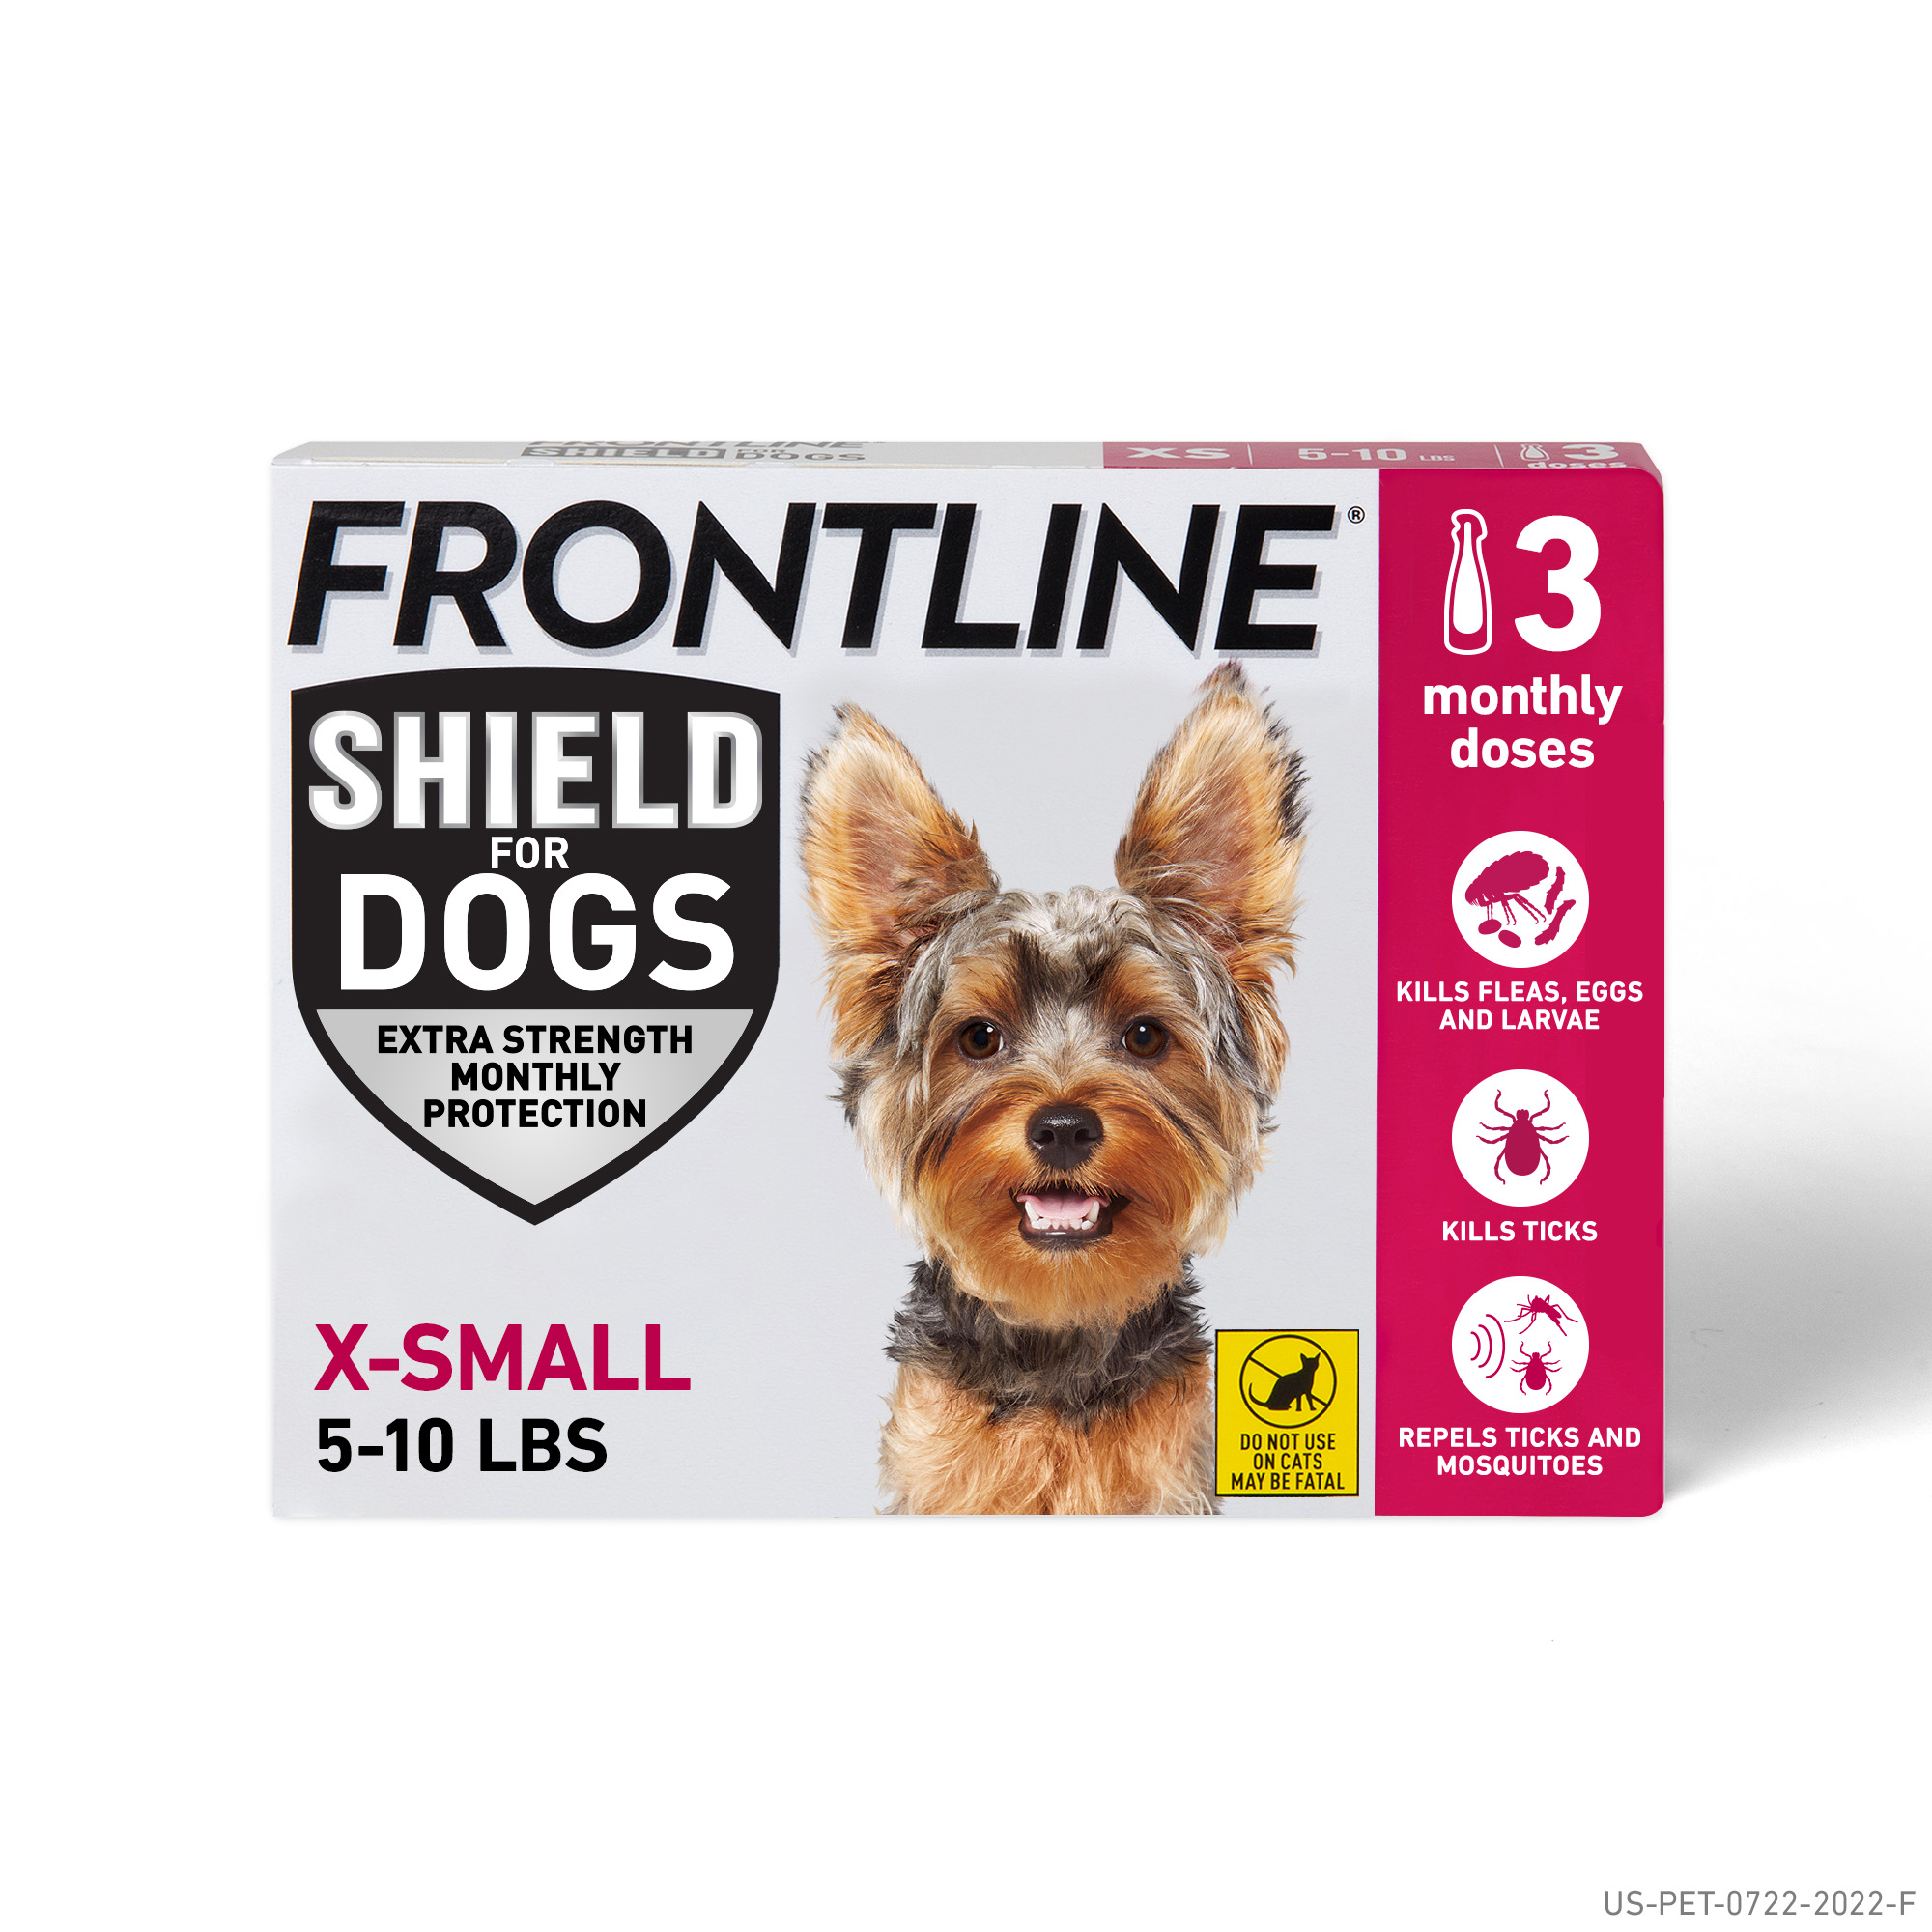 Frontline Shield Usage